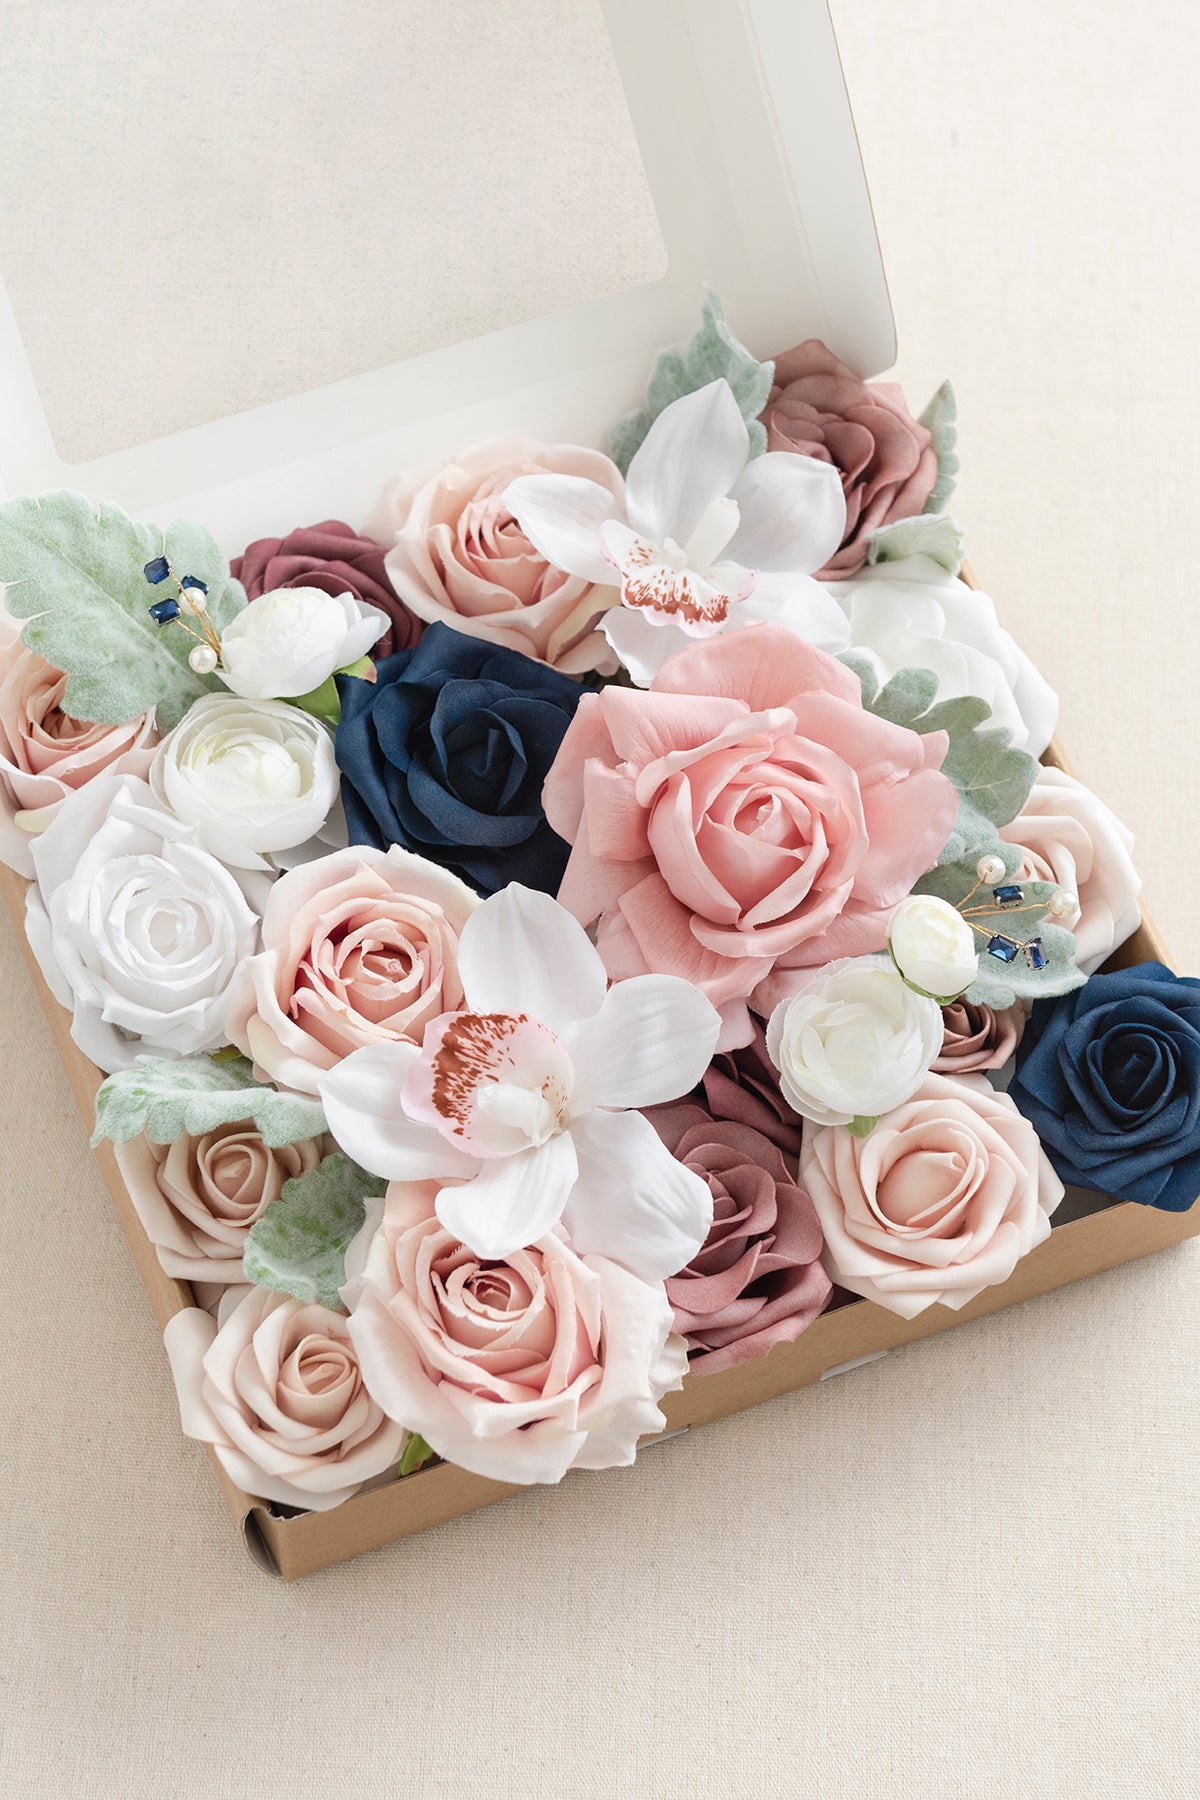 DIY Designer Flower Boxes in Dusty Rose & Navy